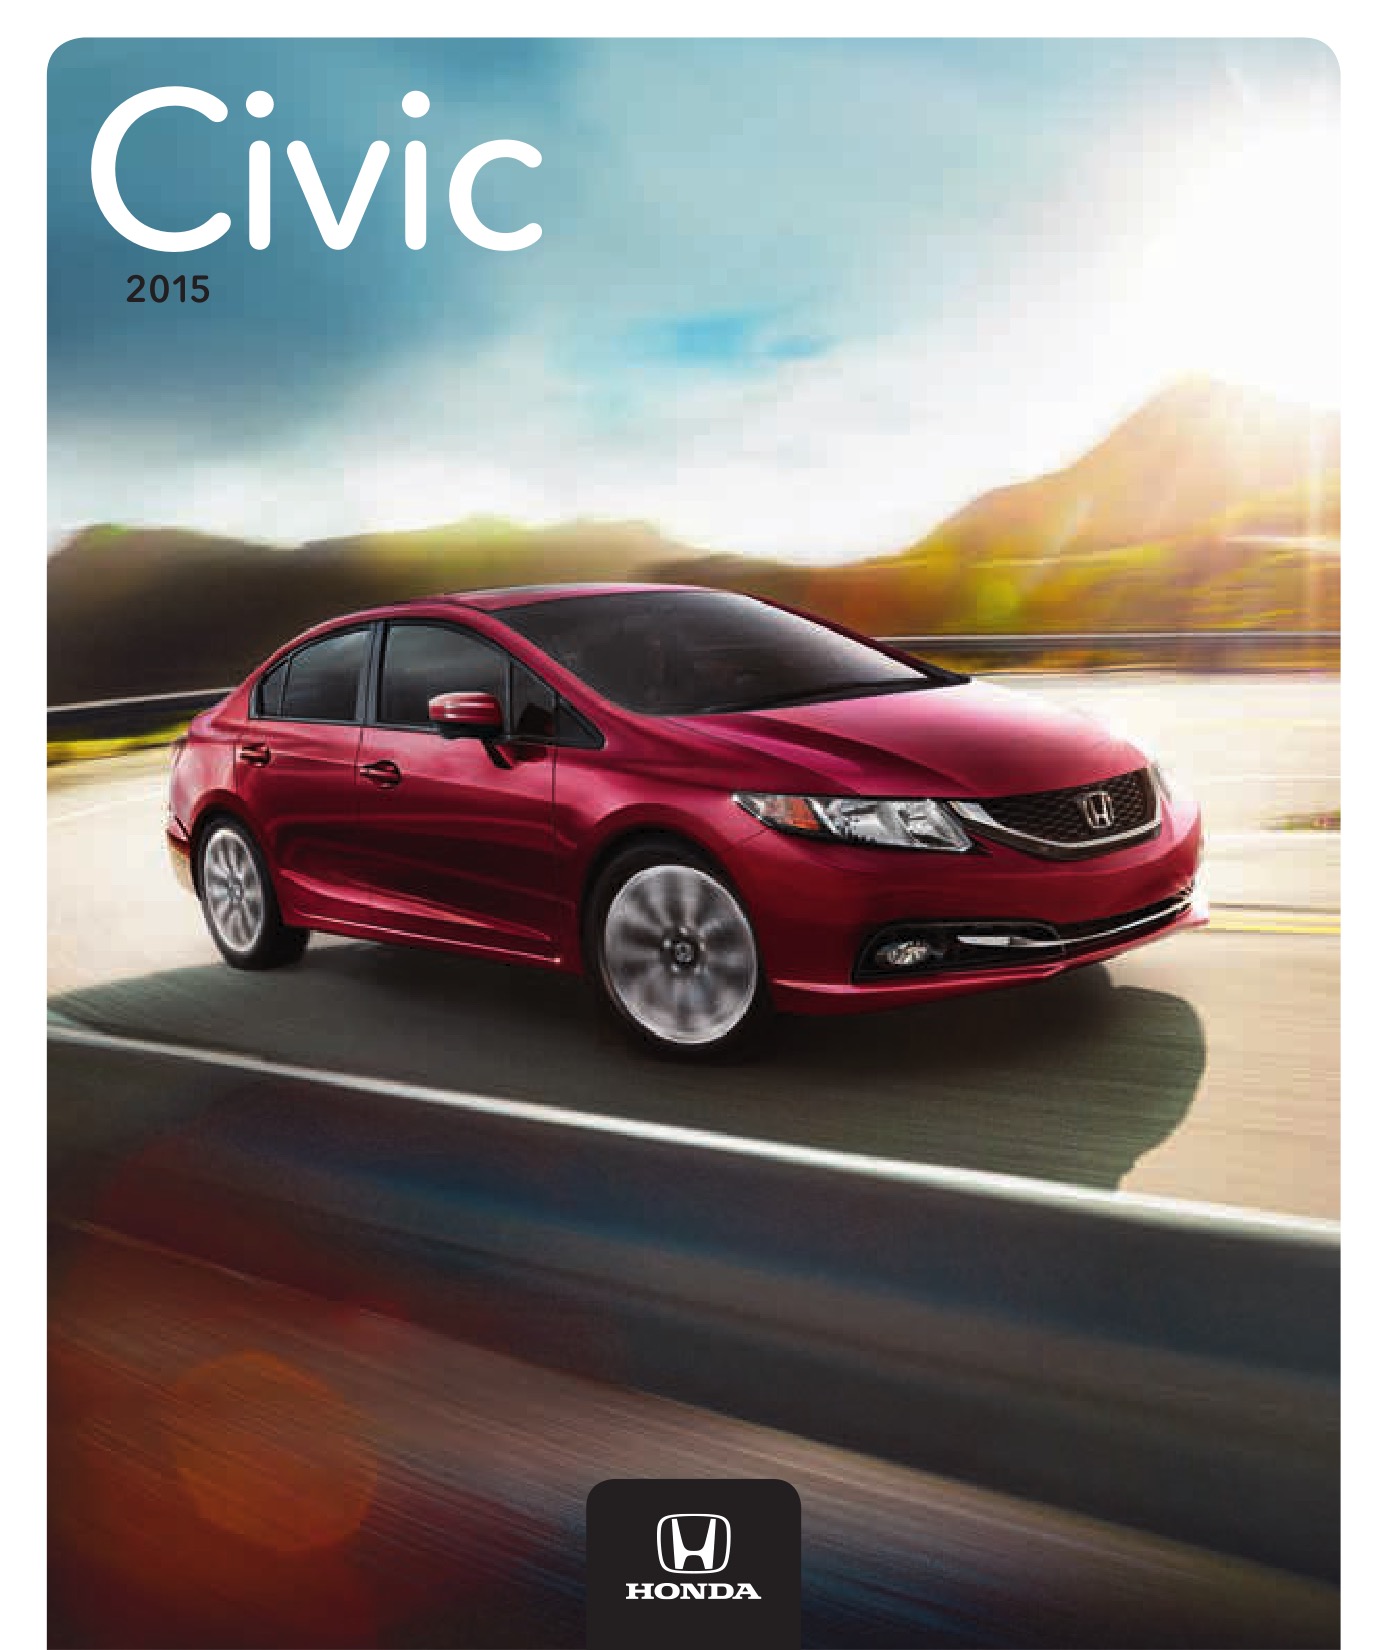 2015 Honda Civic Brochure